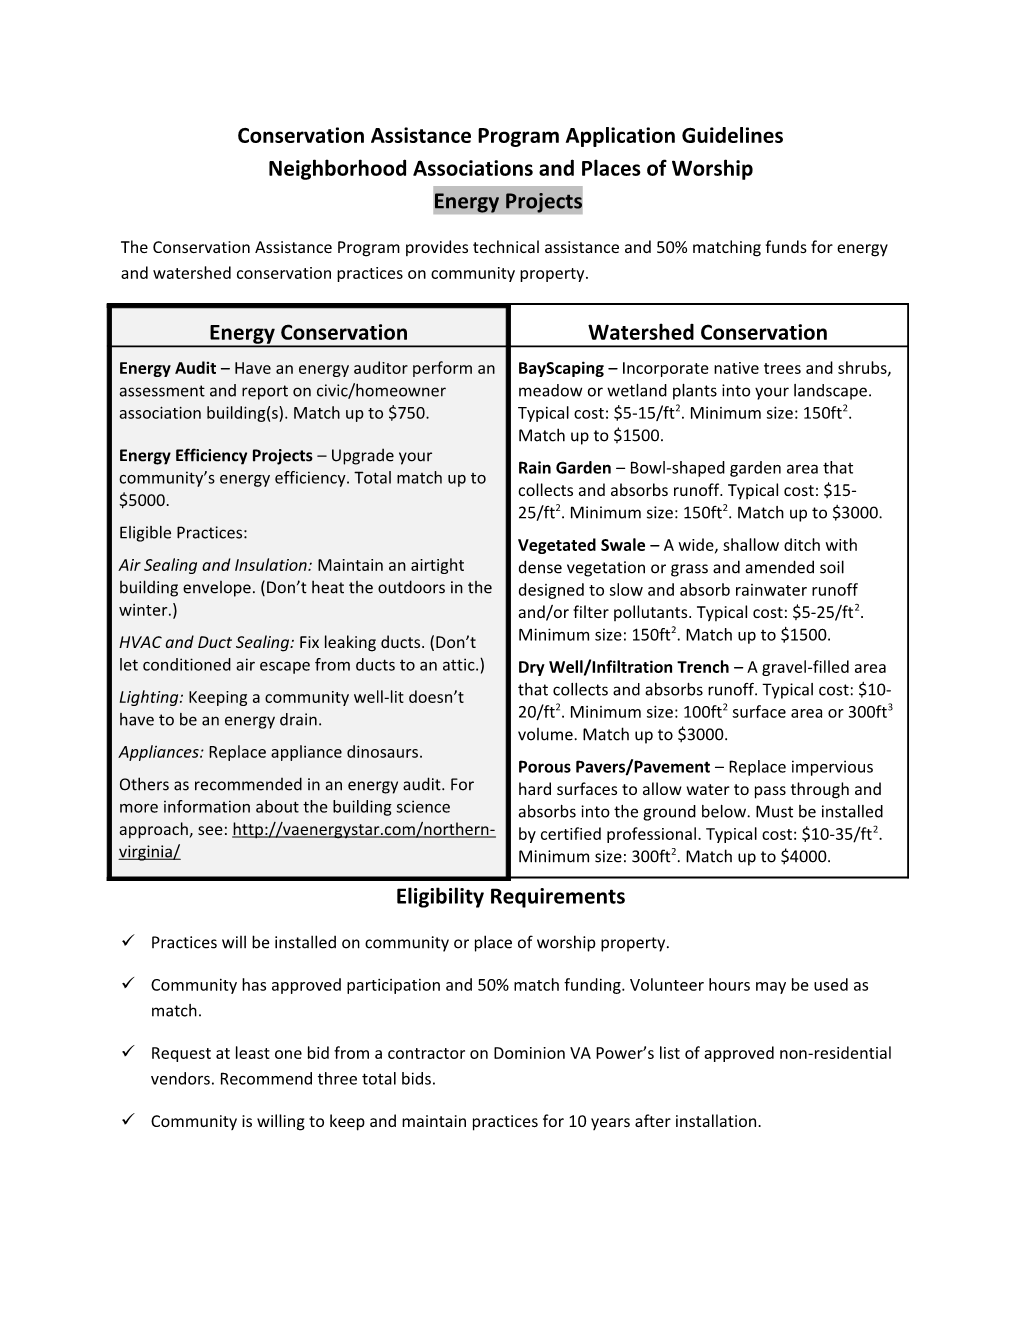 Conservation Assistance Program - Energy Application